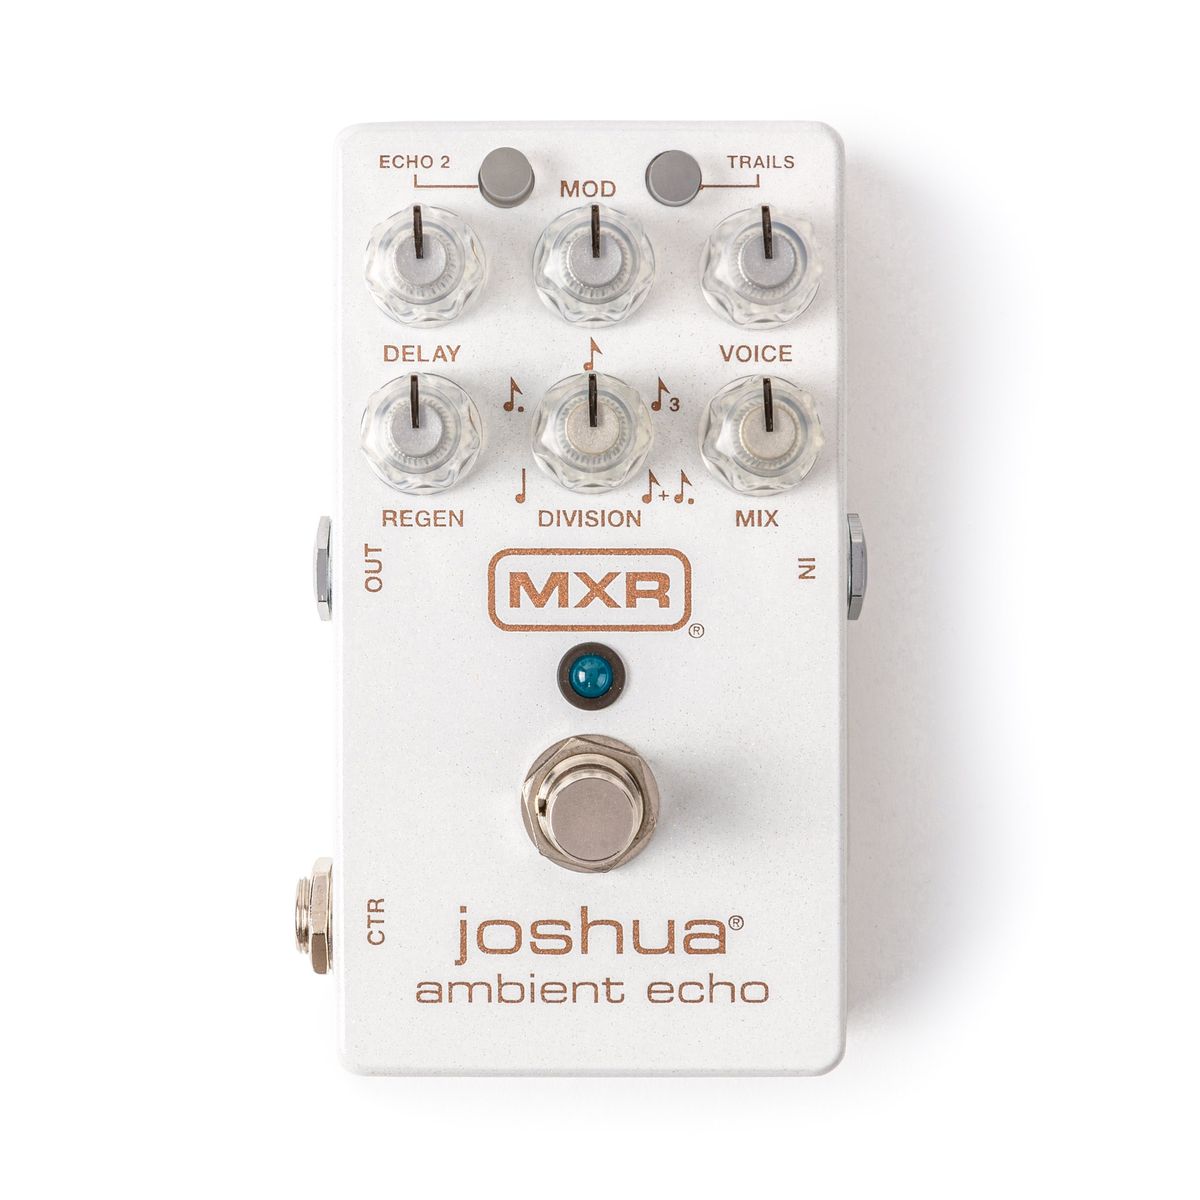 MXR Joshua echo guitar pedal